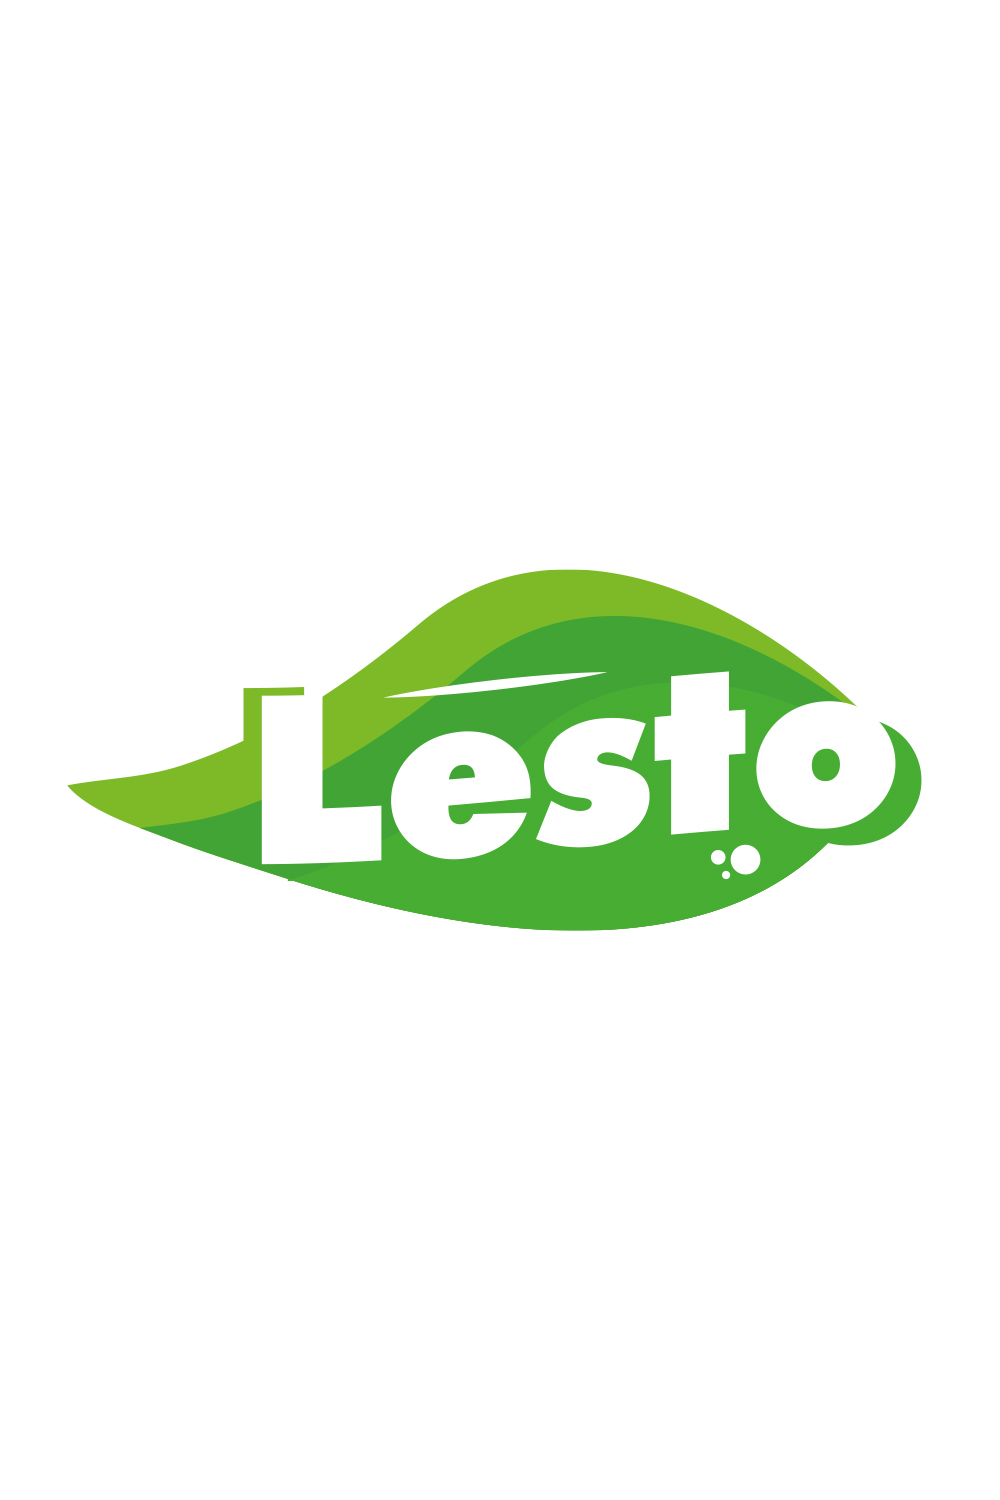 Lesto ( Typography ) logo design Txt is easily editable pinterest preview image.